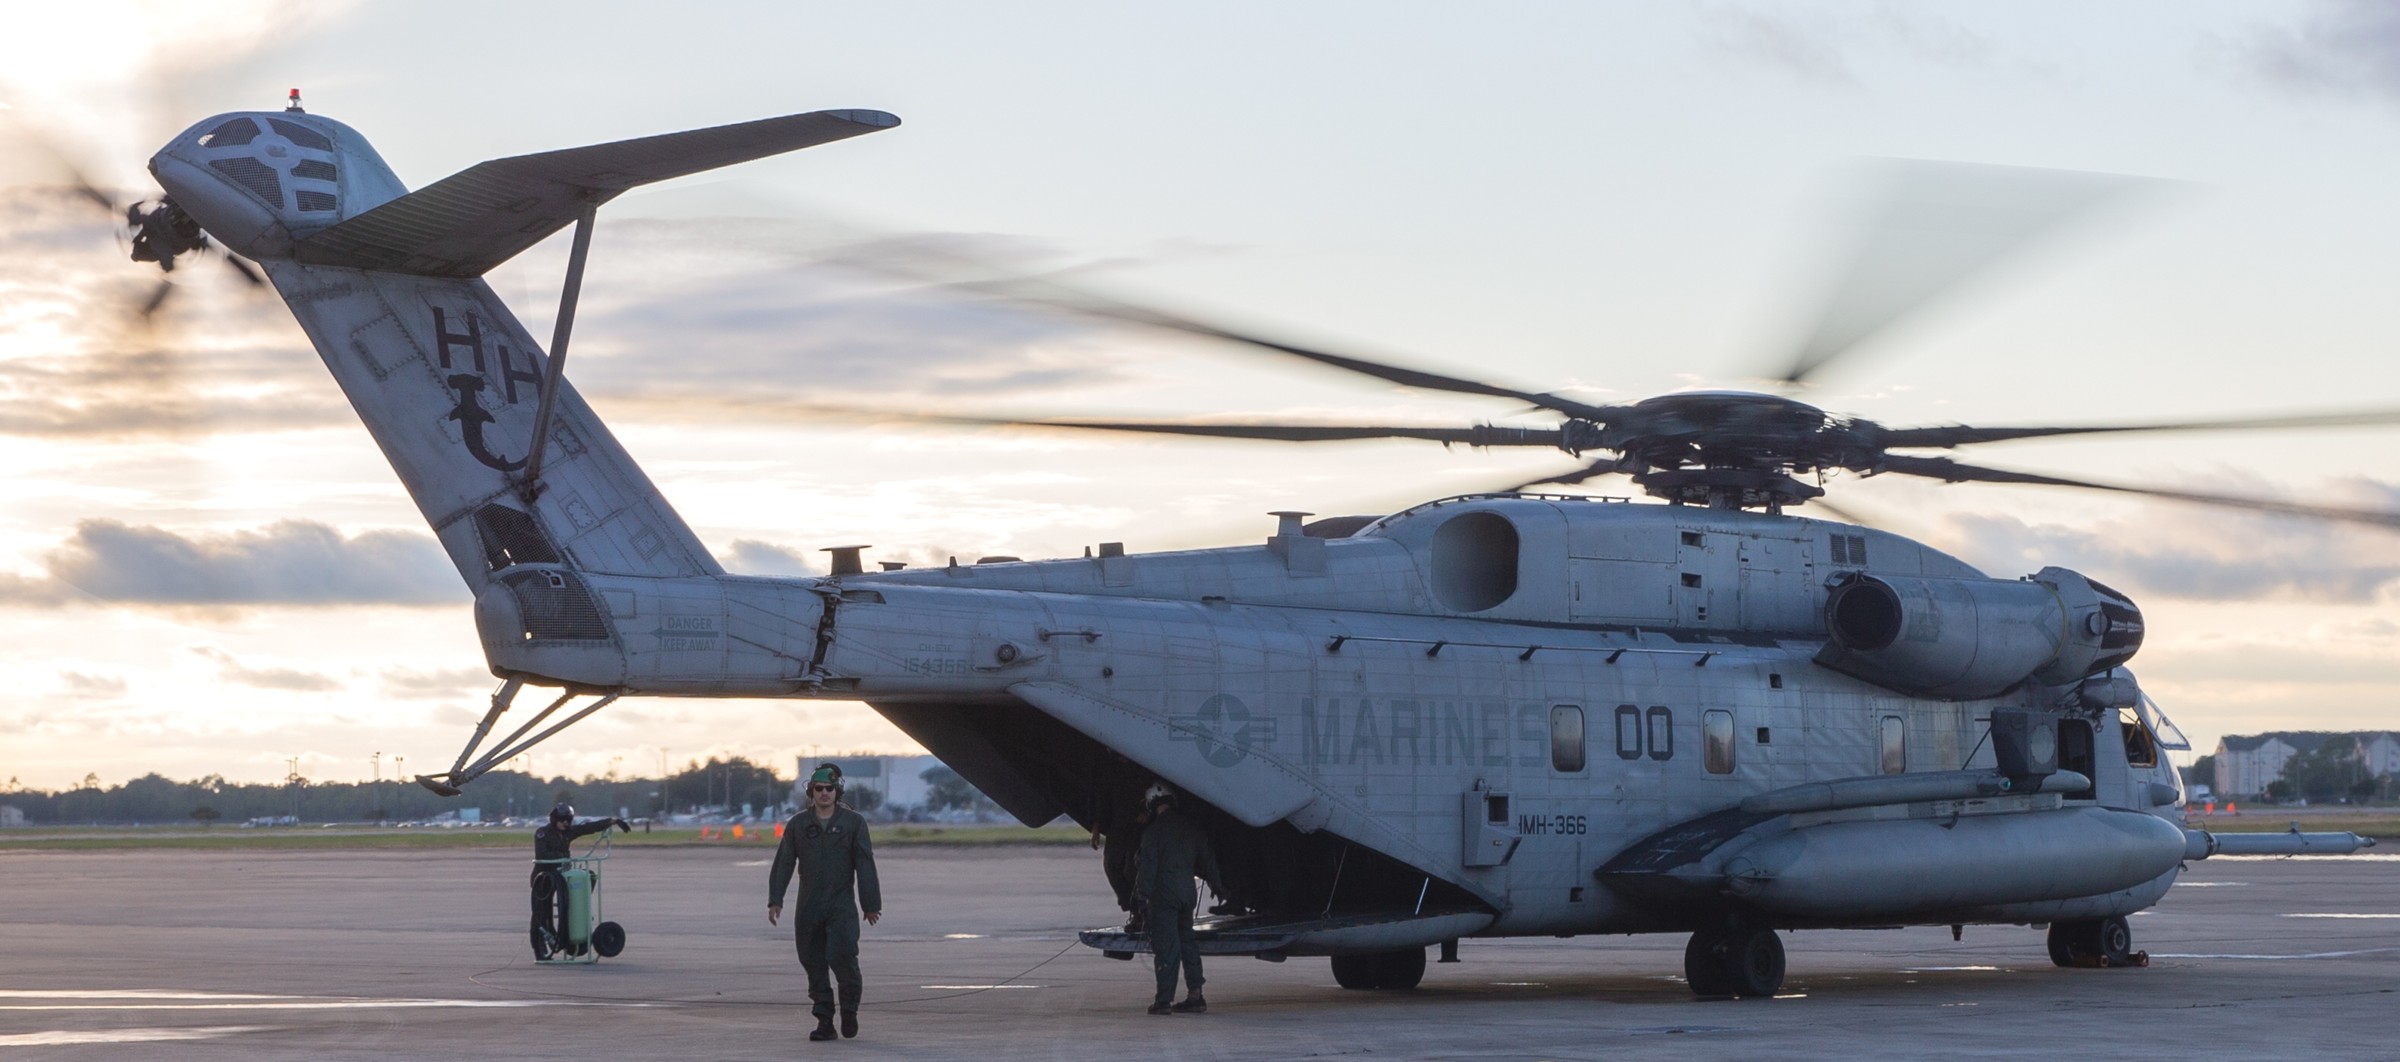 hmh-366 hammerheads marine heavy helicopter squadron usmc sikorsky ch-53e super stallion 95 exercise raven gulfport mississippi